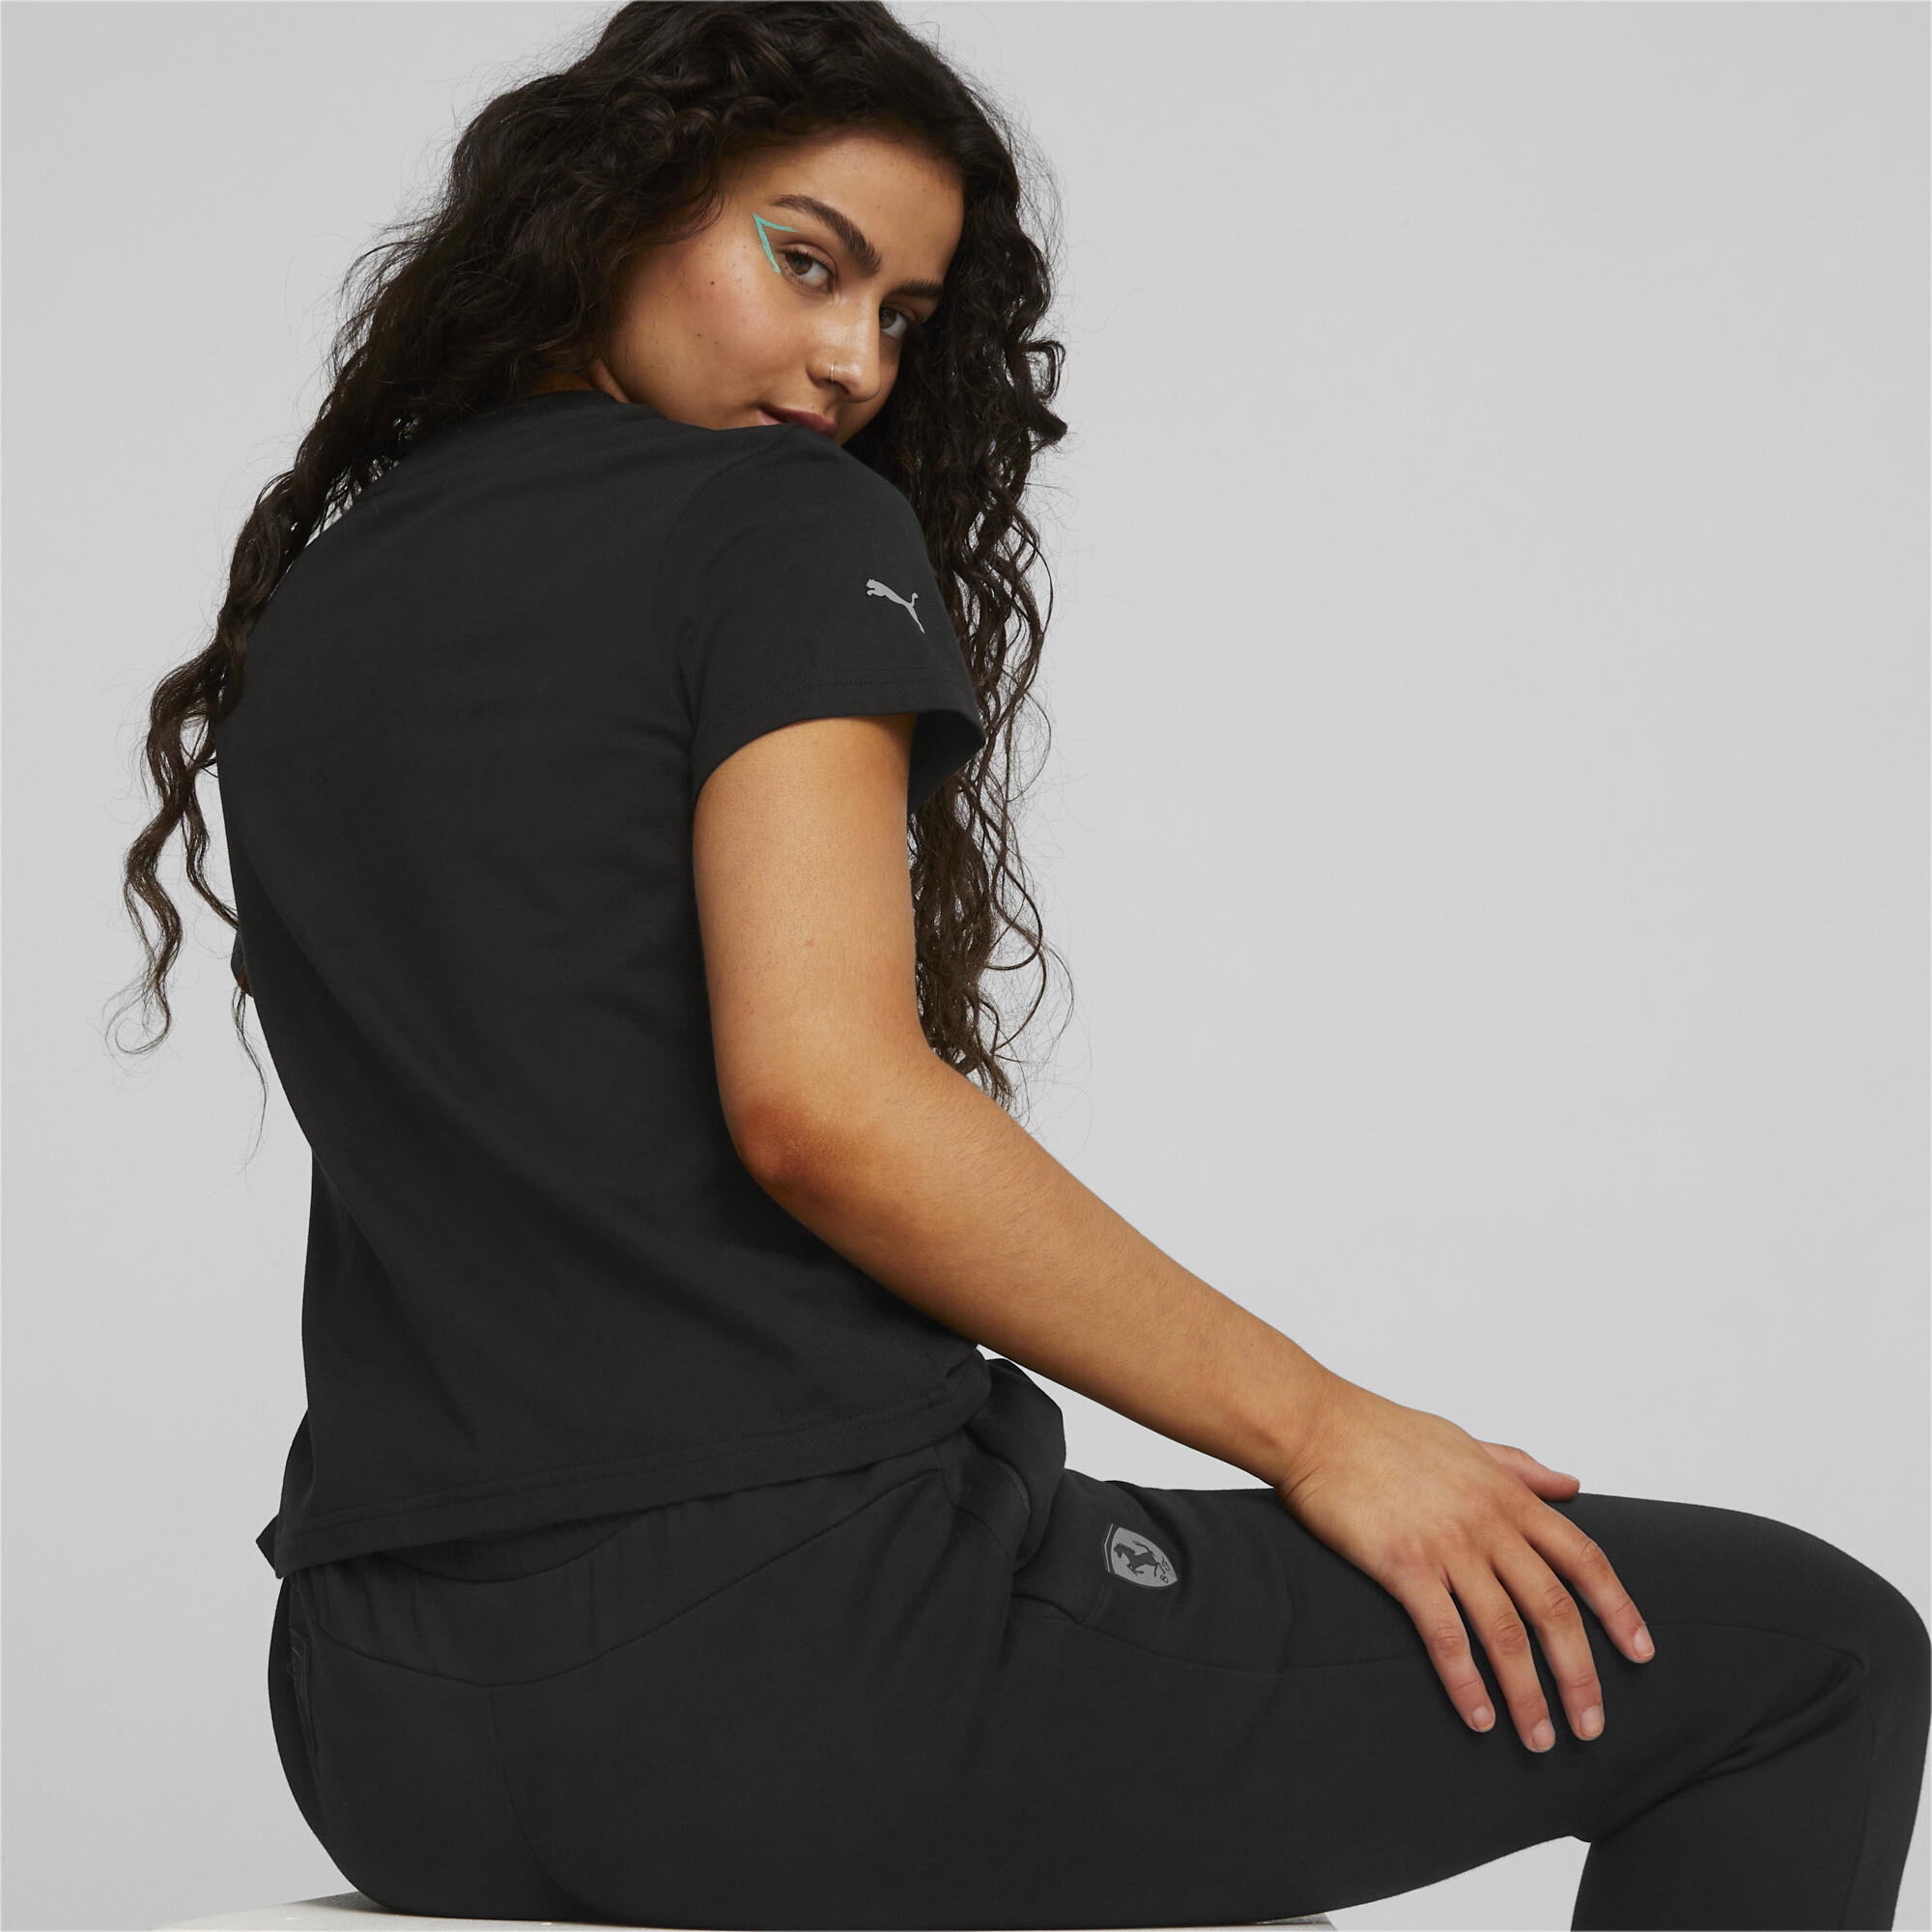 Women's Puma Scuderia Ferrari Style T-Shirt, Black, Size XL, Clothing